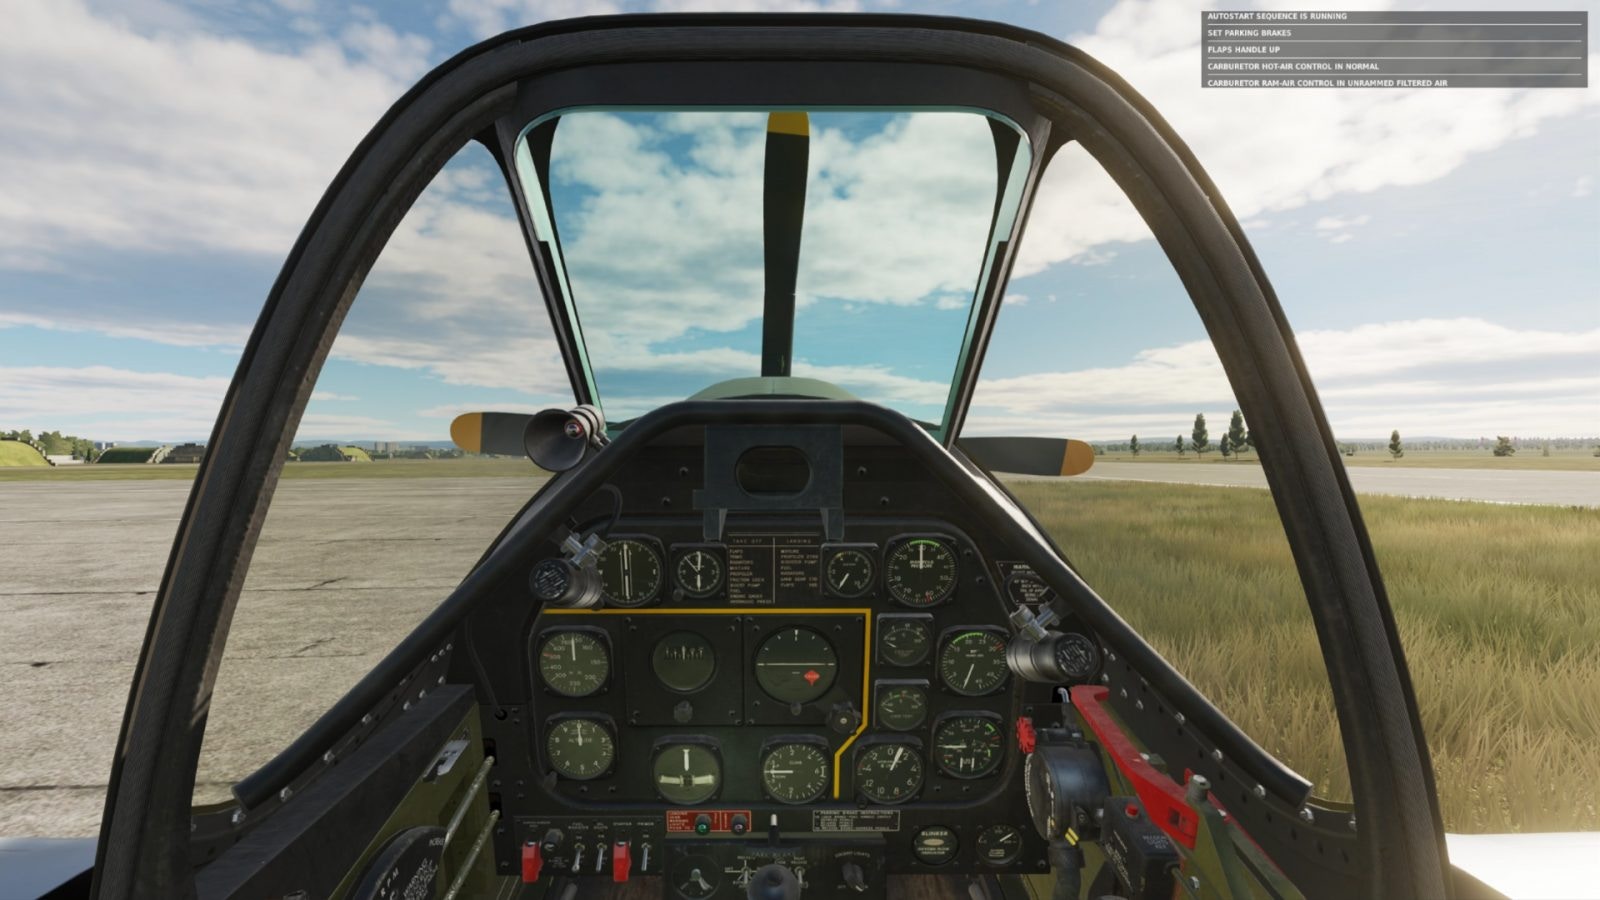 Digital Combat Simulator: Never Been A Better Time To Start | Beginners Guide